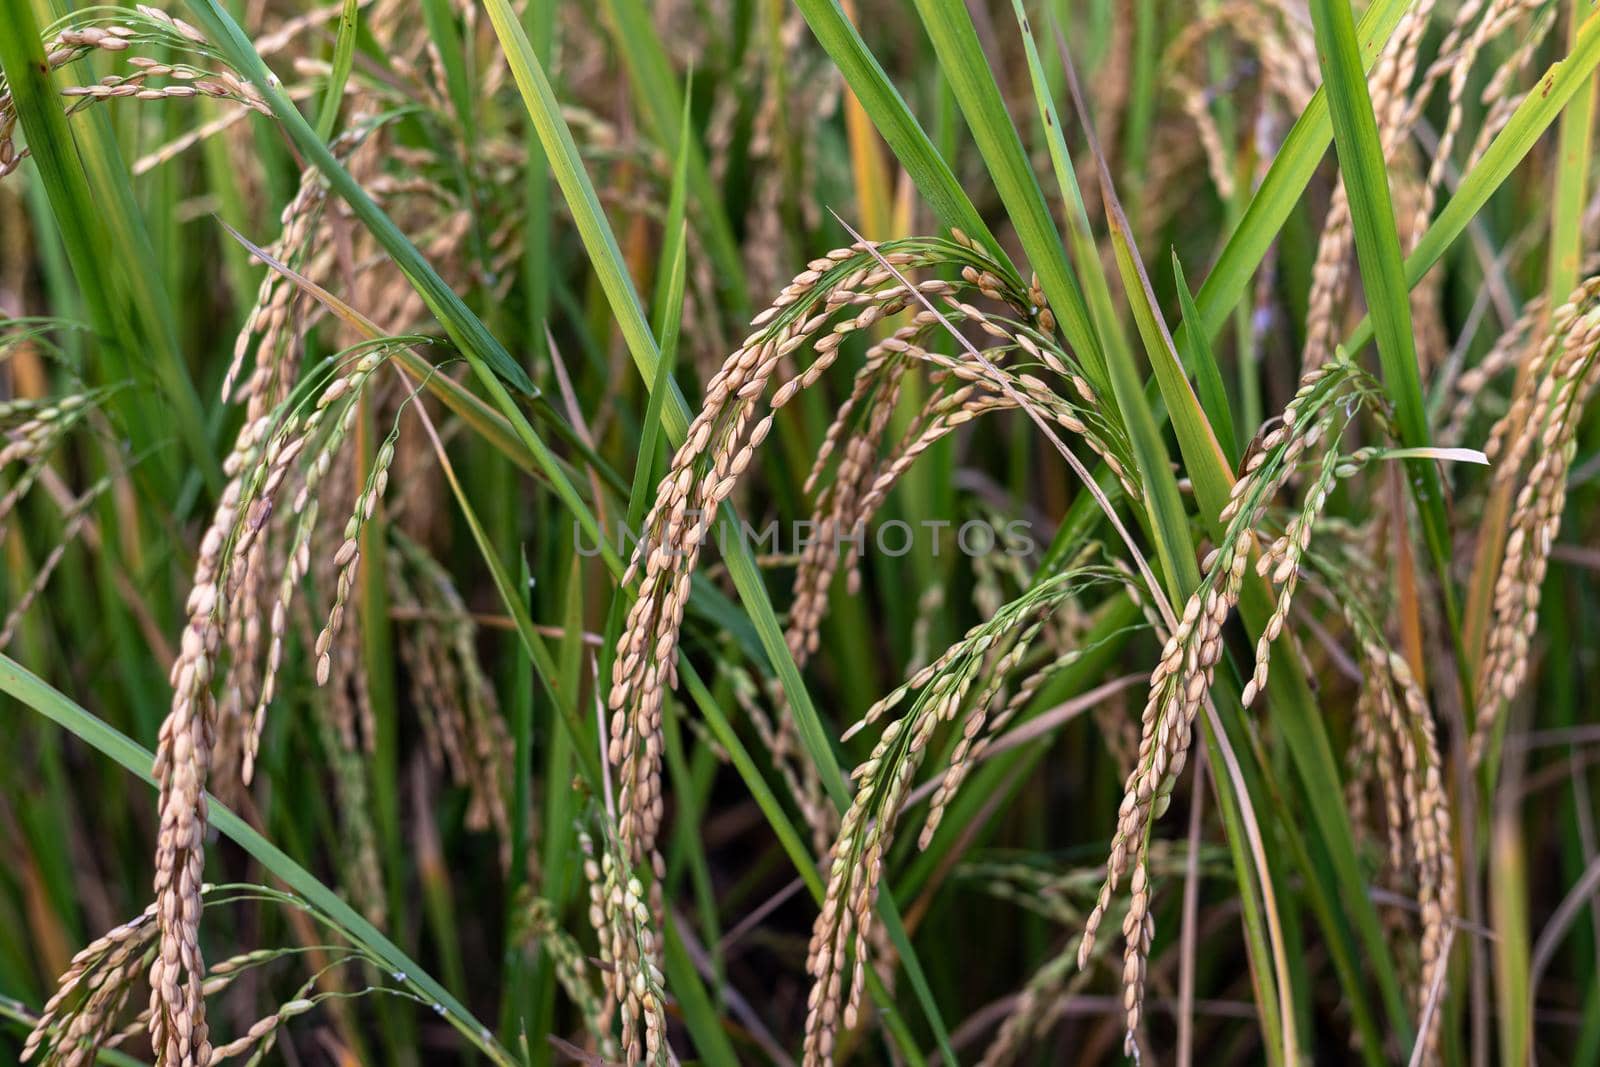 Ears of ripe rice closeup view